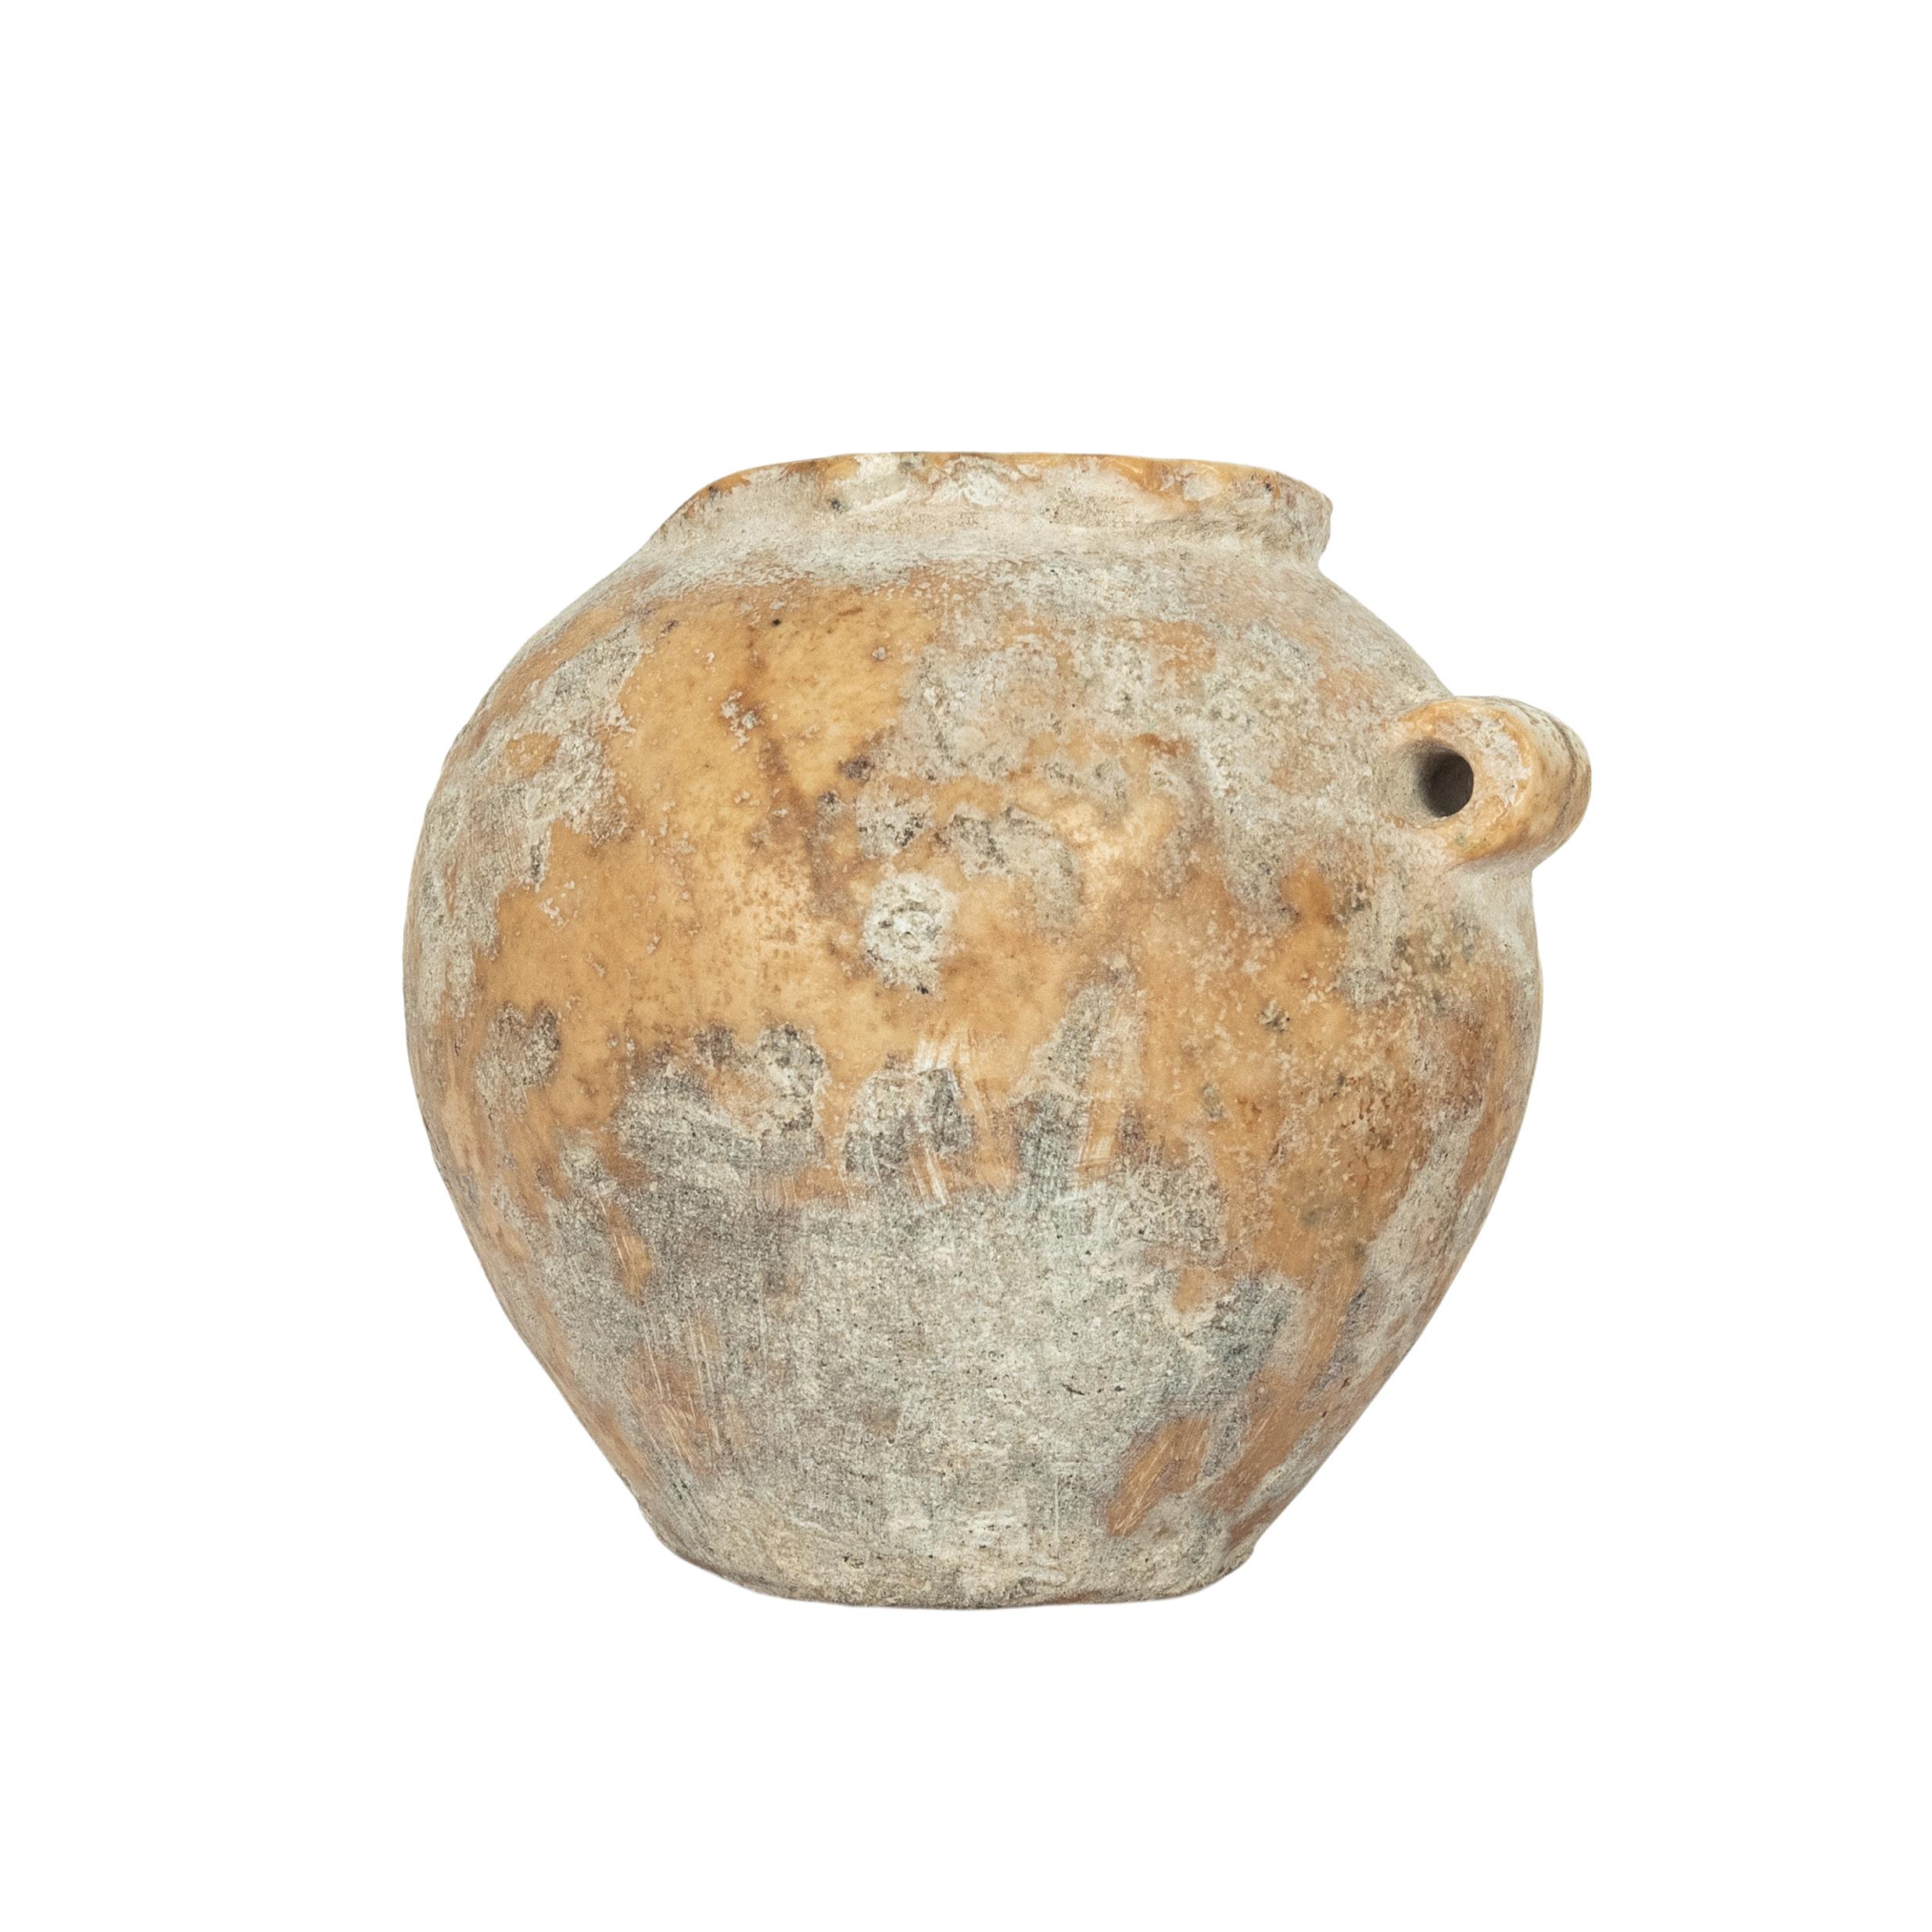 Ancient Egyptian Old Kingdom Miniature Lime Stone Vessel Jar 2600-2800 BCE For Sale 1